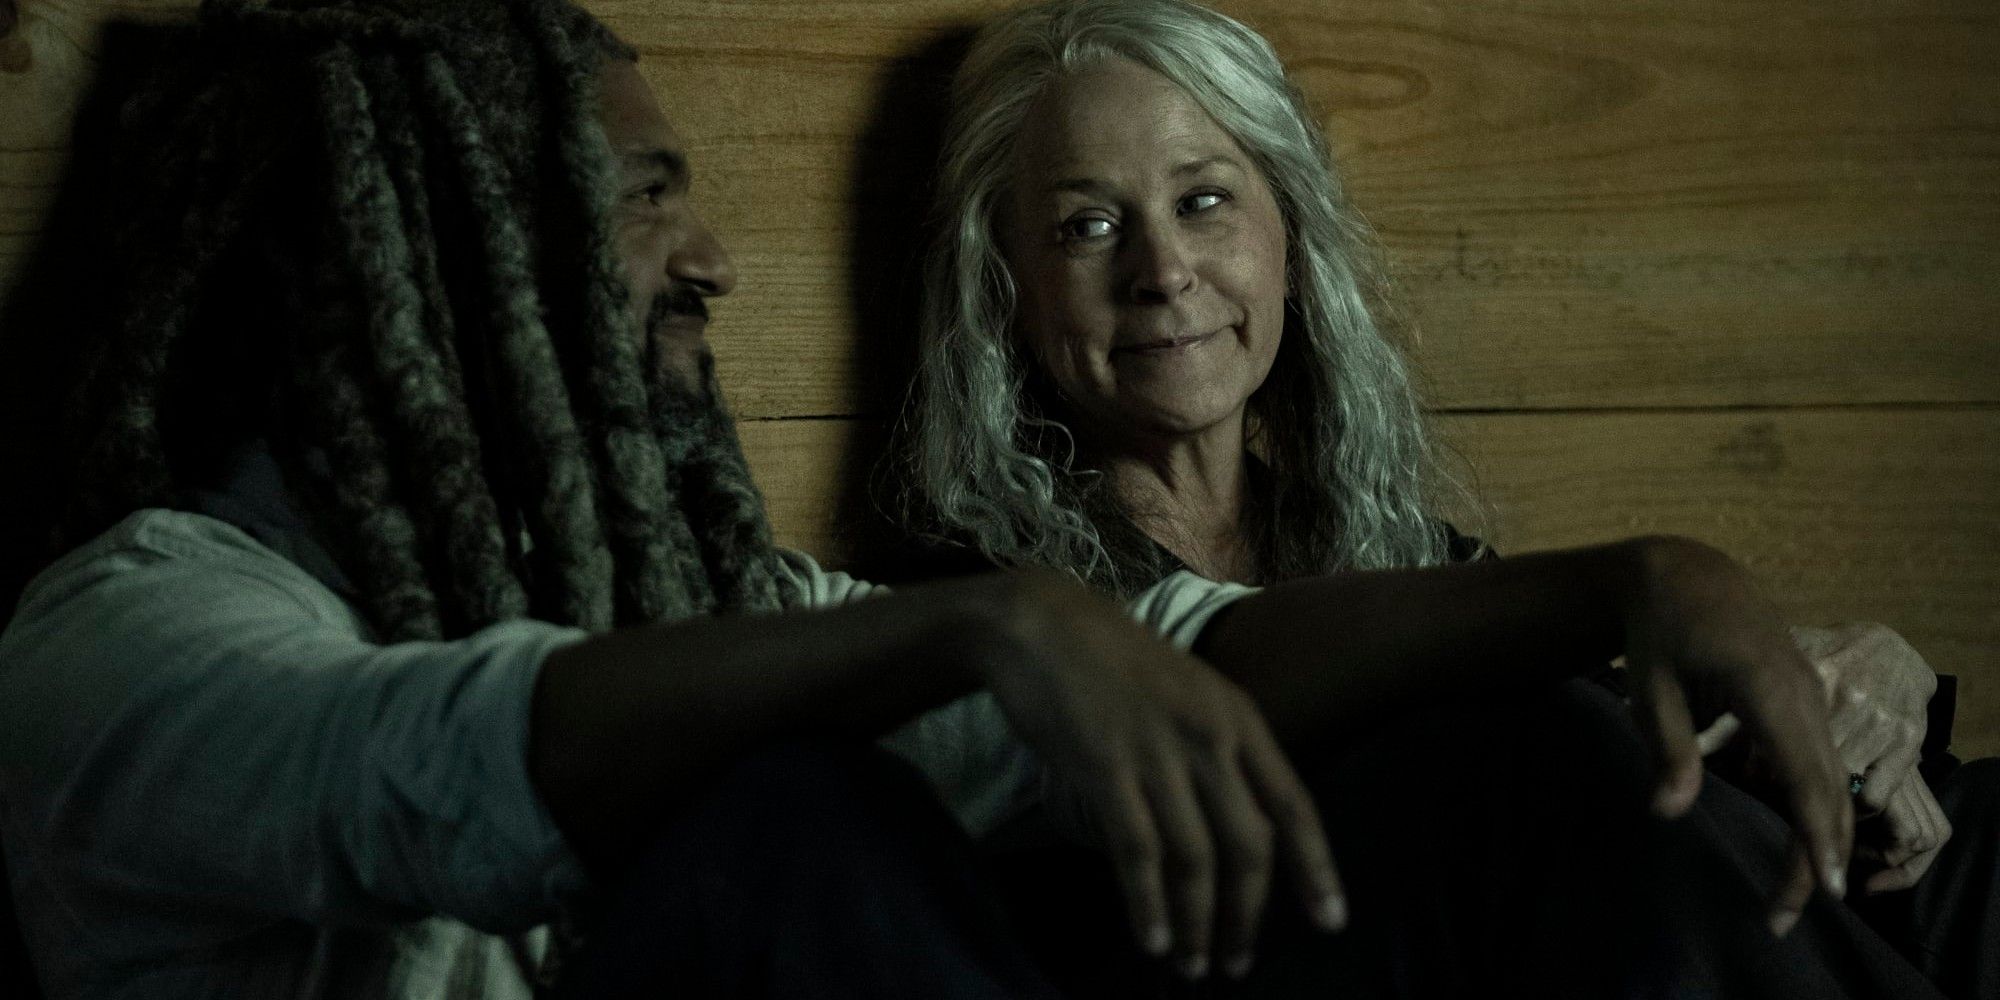 Khary Payton as Ezekiel and Melissa McBride as Carol in Walking Dead